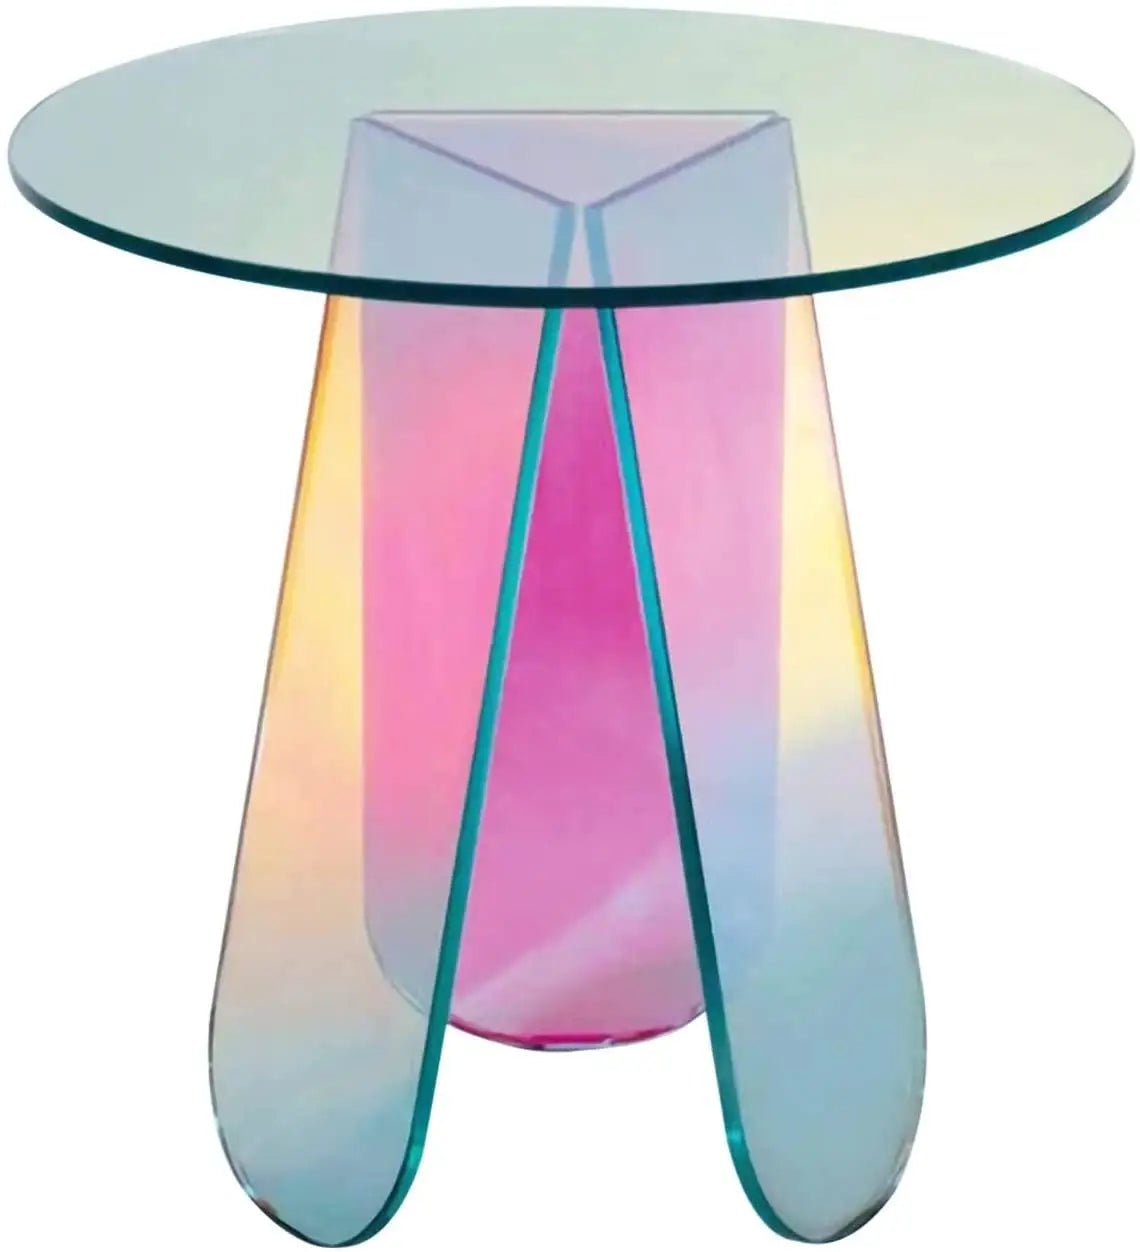 LOVEMI - Acrylic Rainbow Color Coffee Table, Iridescent Glass End